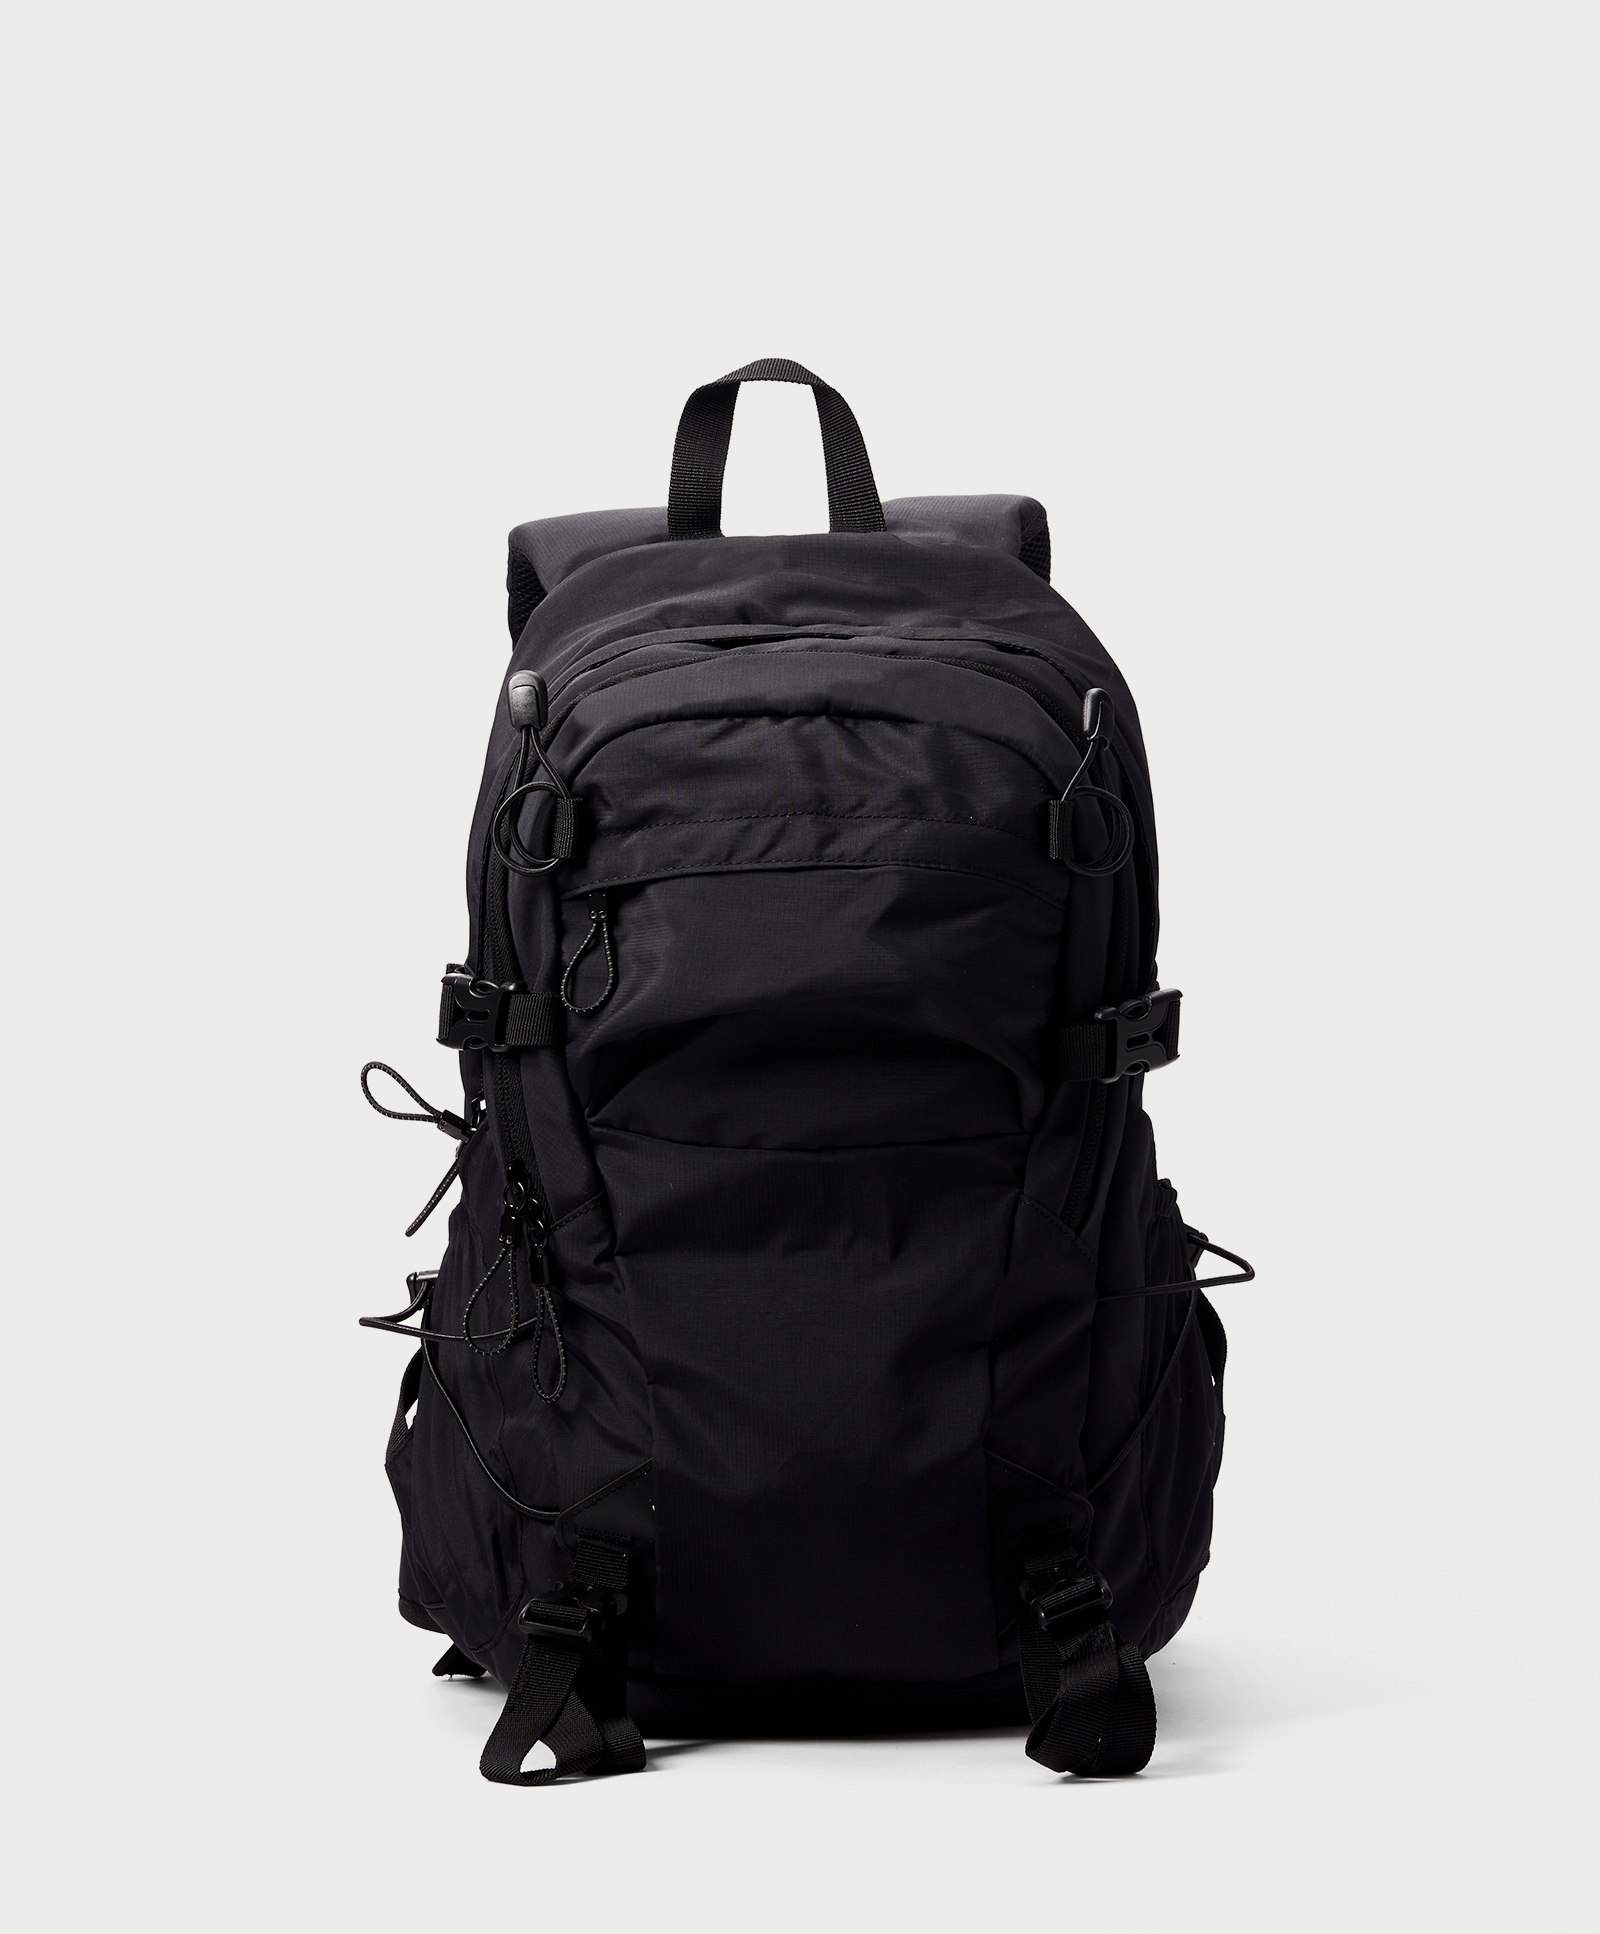 Water-repellent SKI backpack